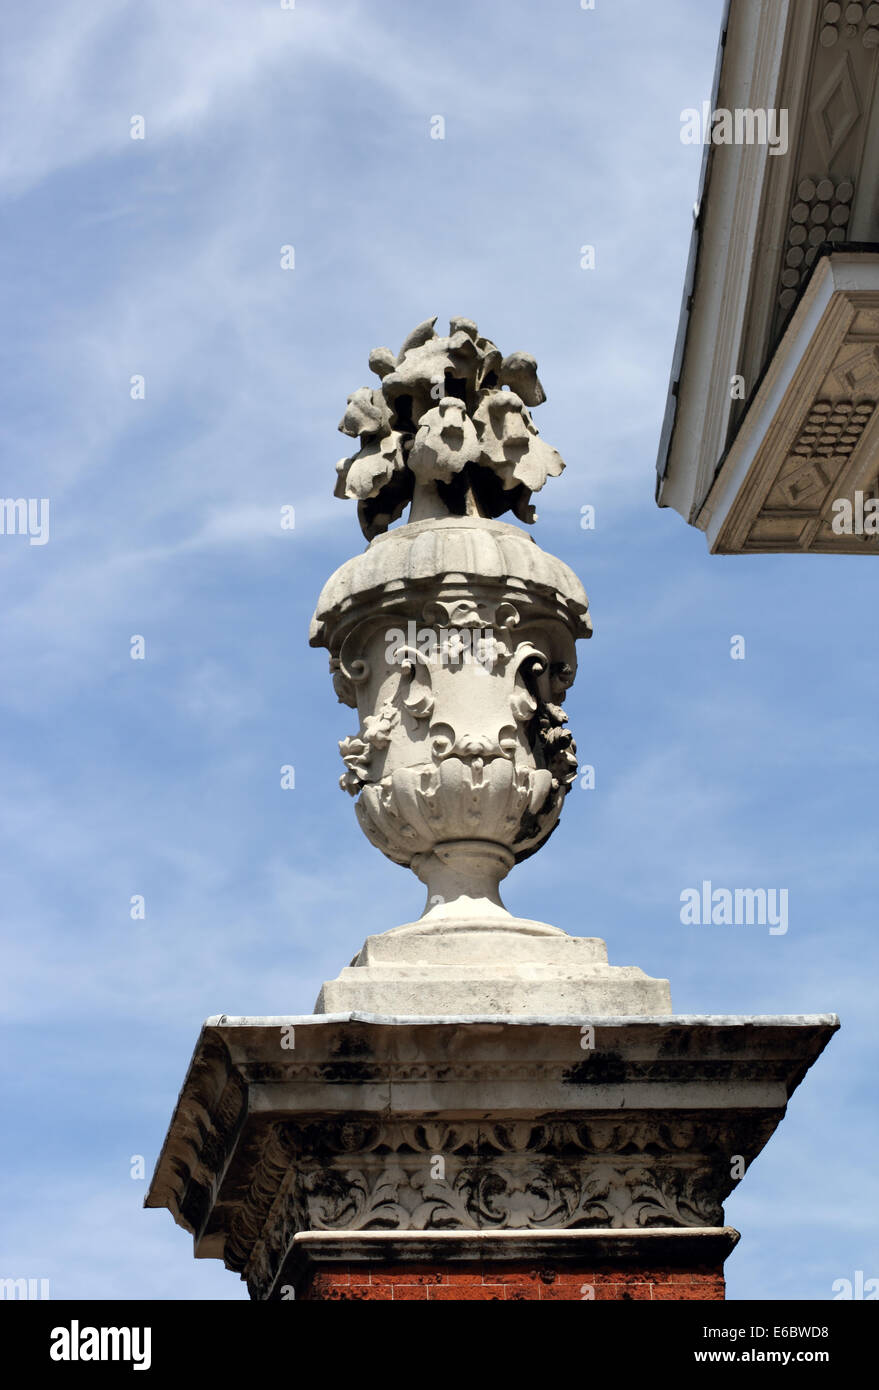 Ornamental architecture, Kensington Gardens, London, England, UK Stock Photo